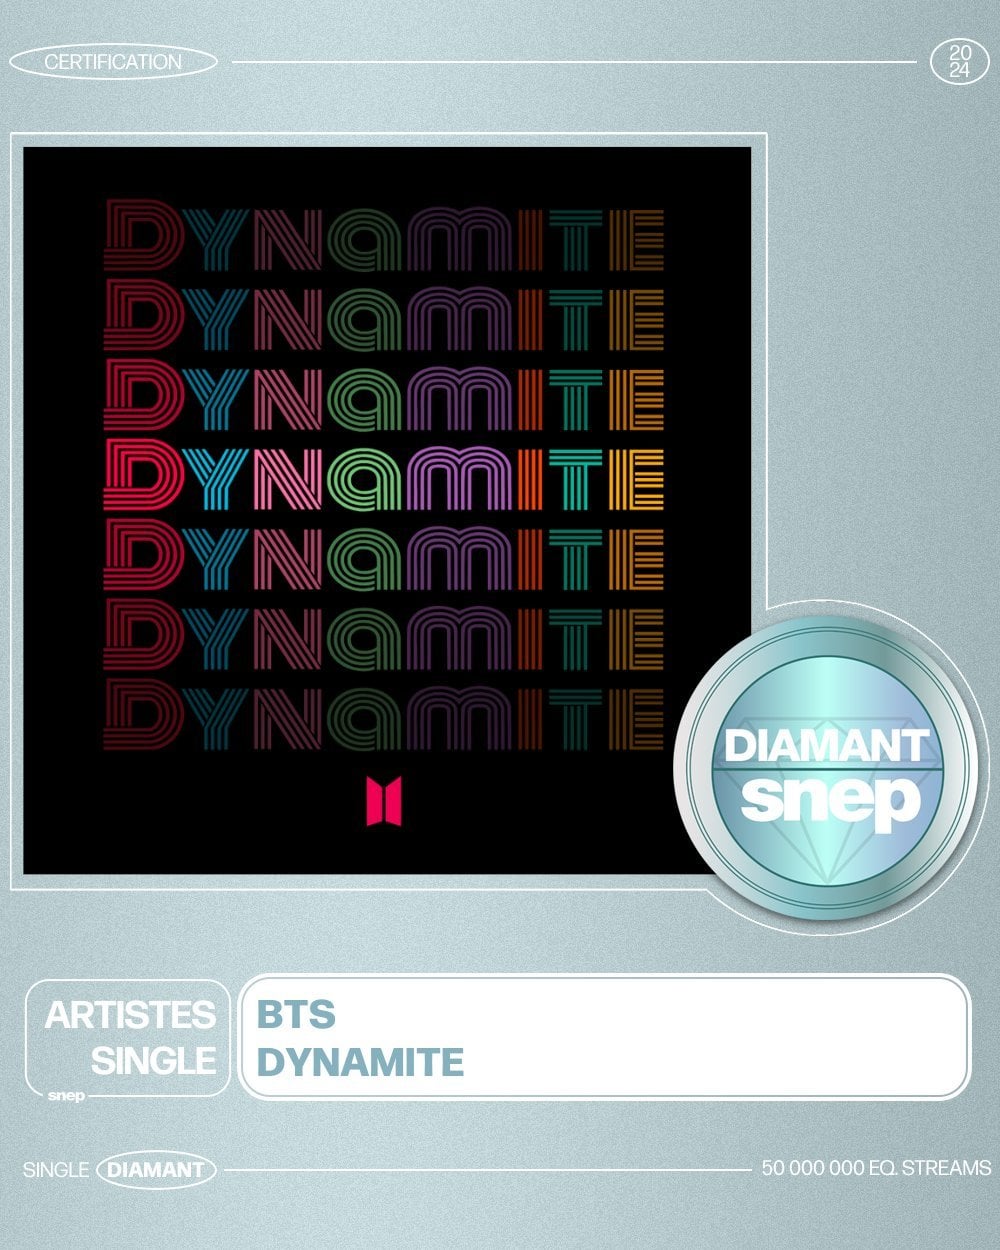 240122 "Dynamite" is now certified Diamond in France.